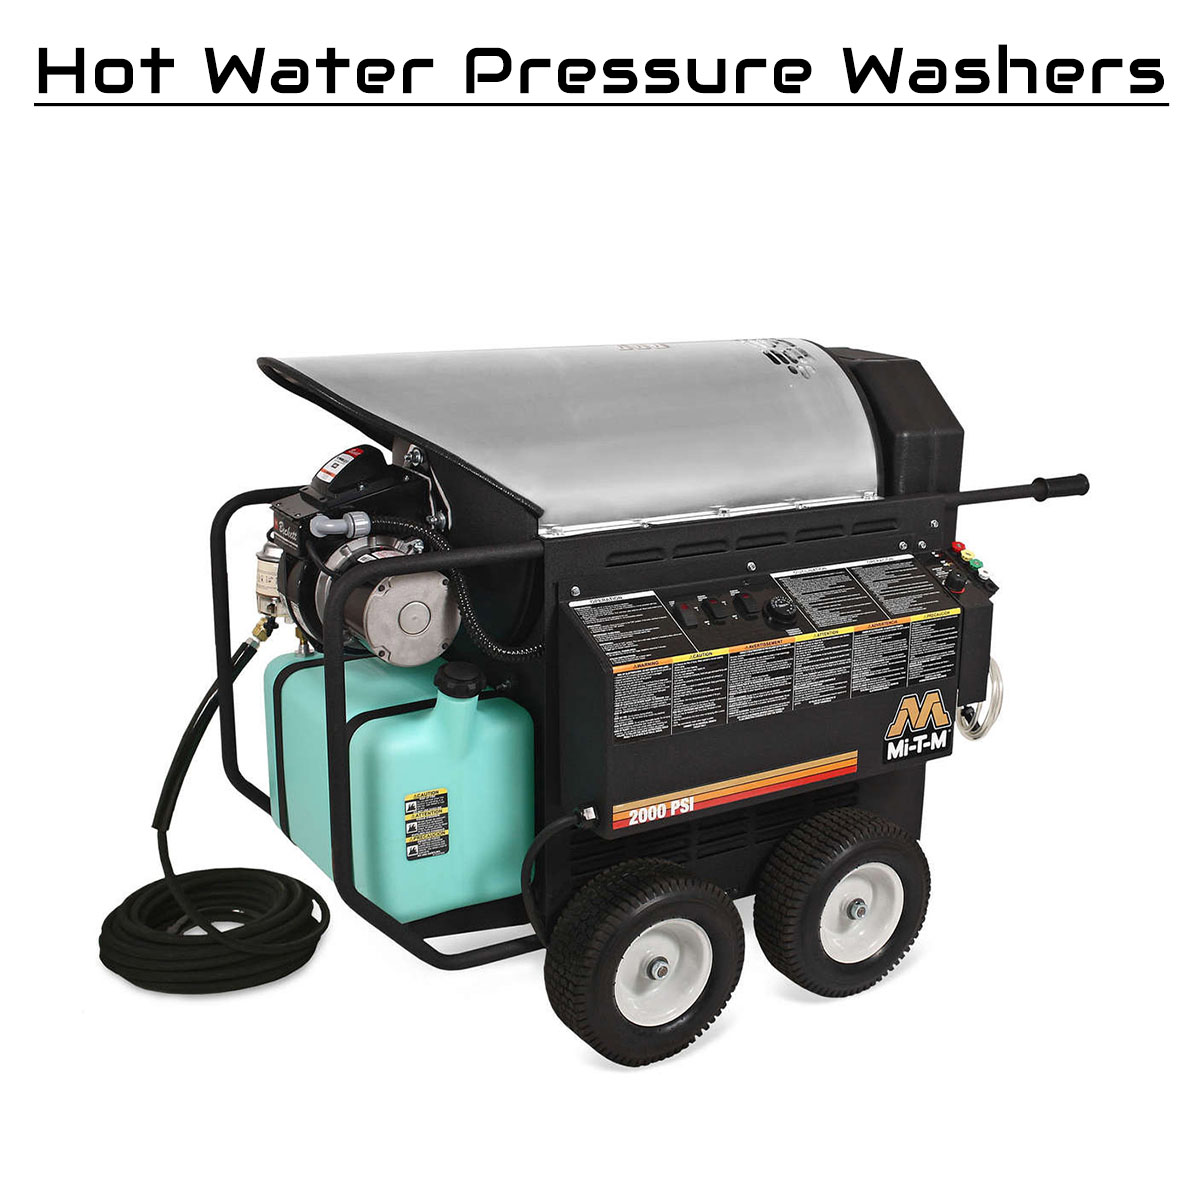 Hot Water Pressure Washers